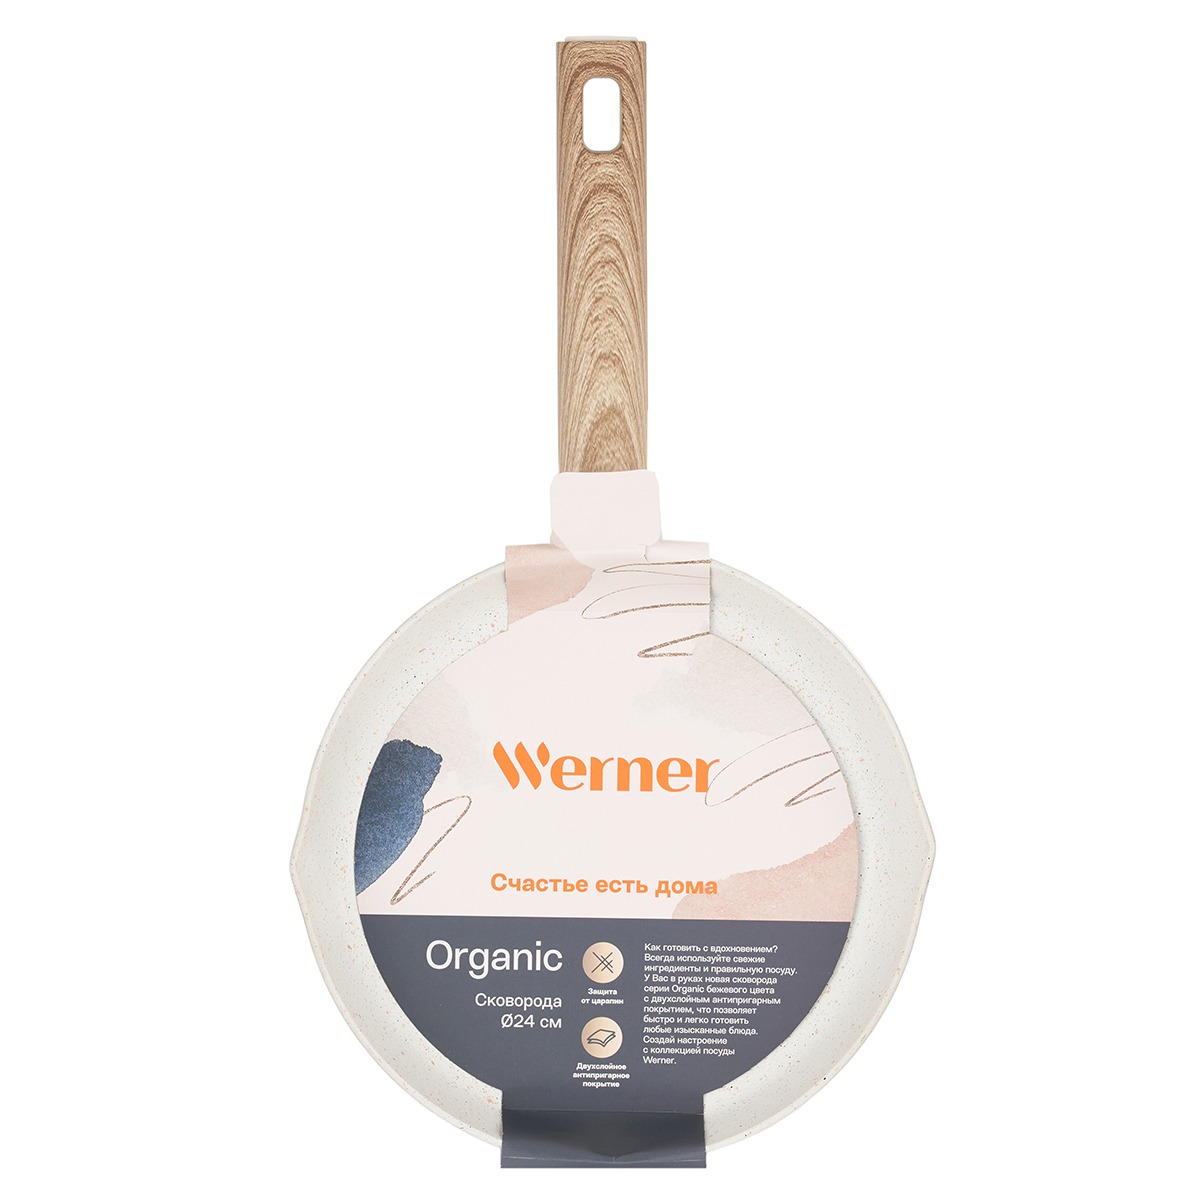 Сковорода Werner Organic beige 24х5 см, цвет бежевый - фото 5